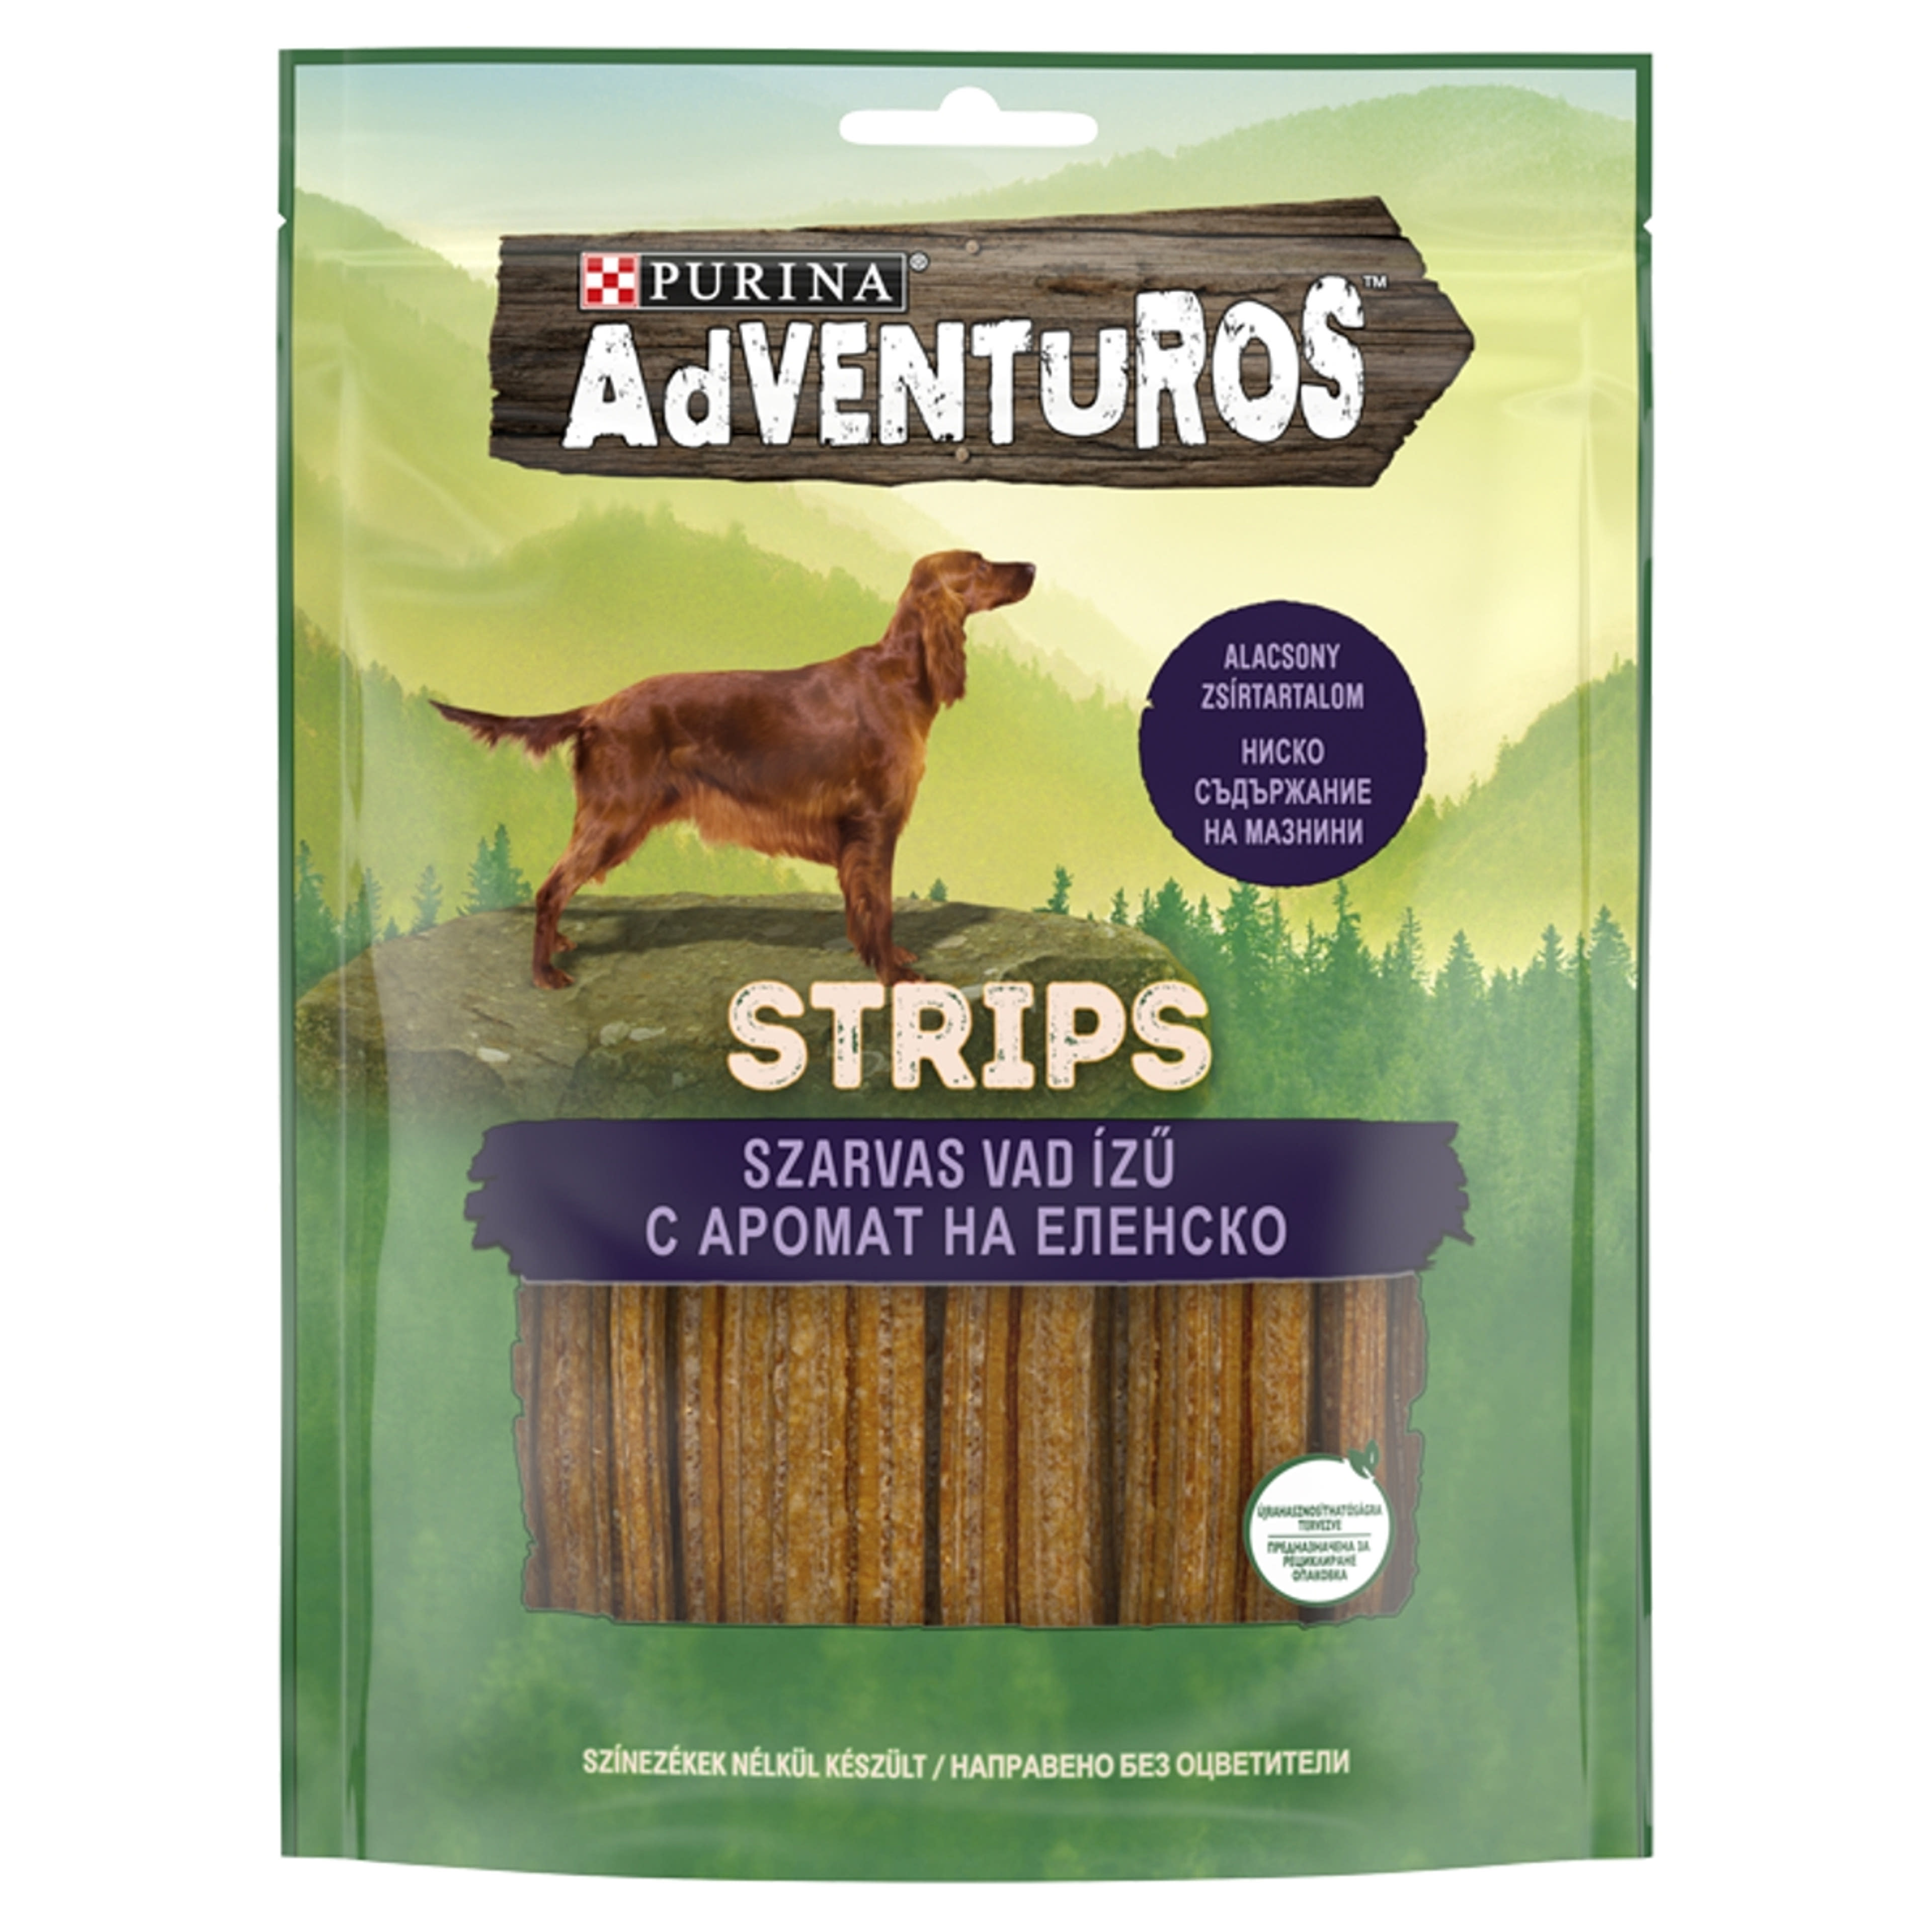 Purina Adventuros jutalomfalat kutyáknak, szarvas, vad ízű - 90 g